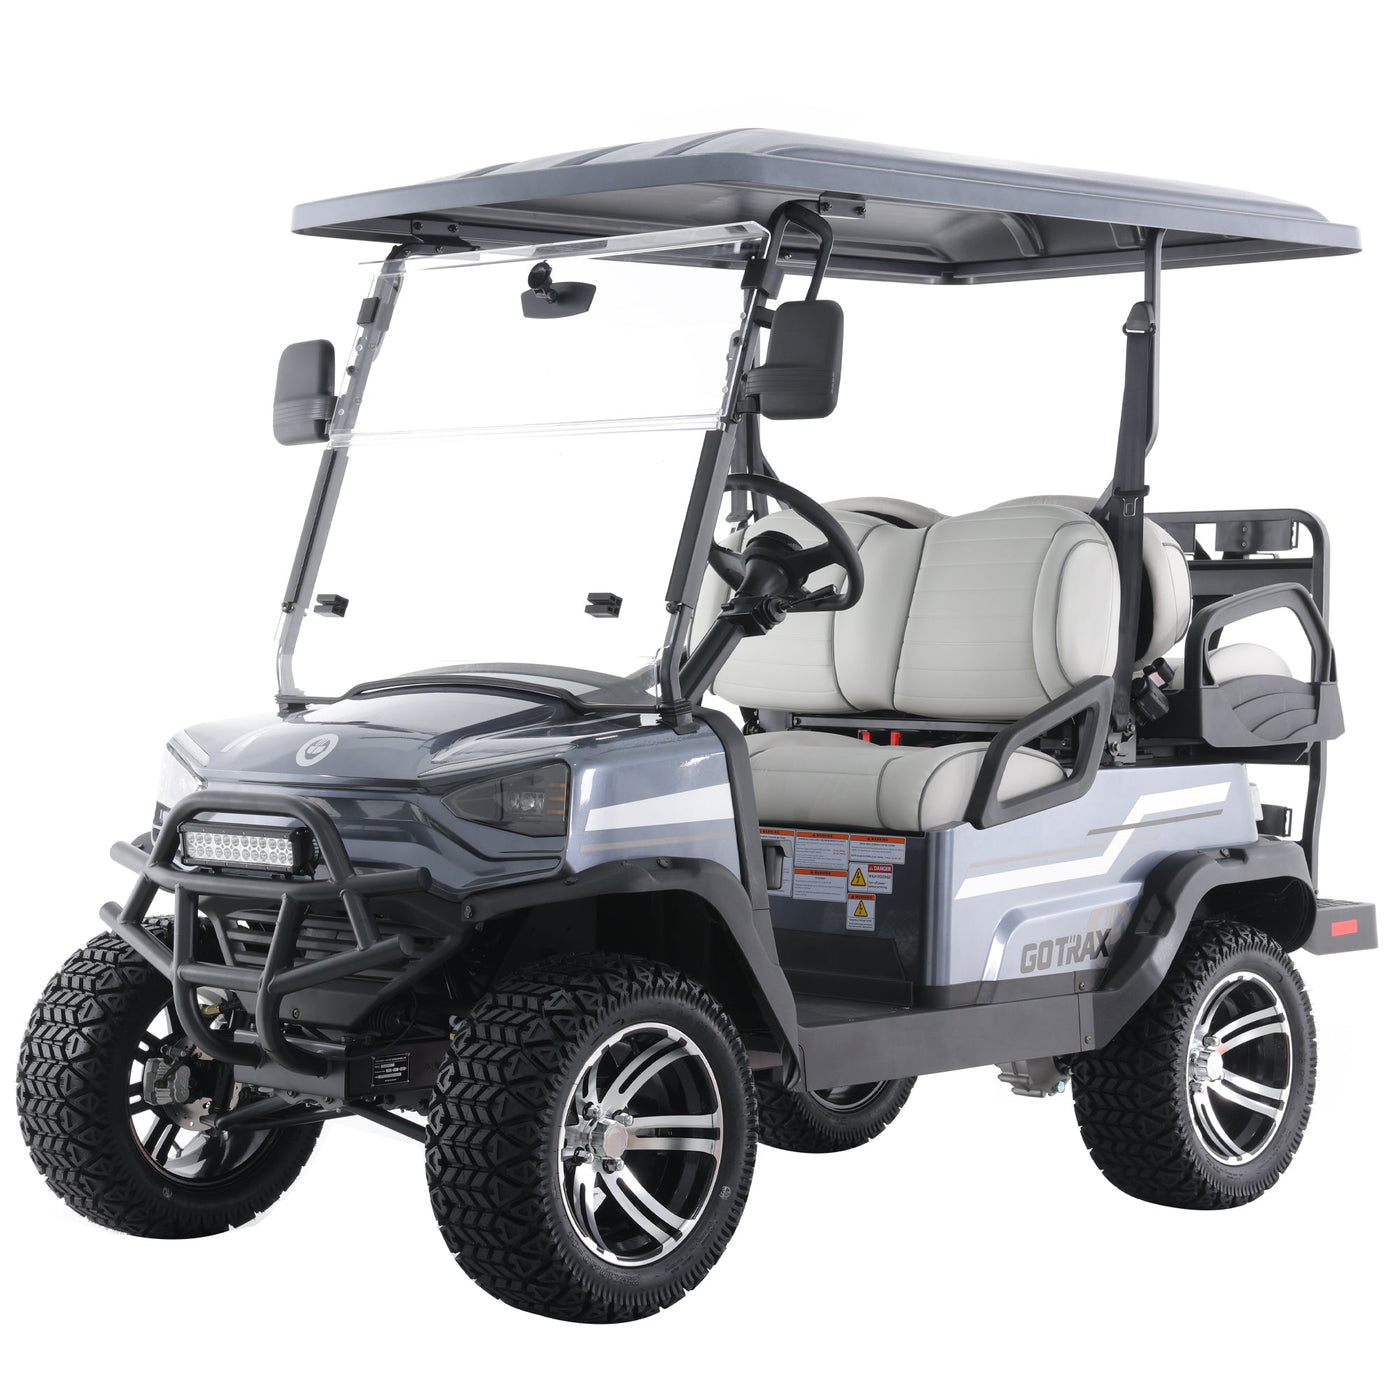 GUIDE4 Electric Golf Cart - GOTRAX